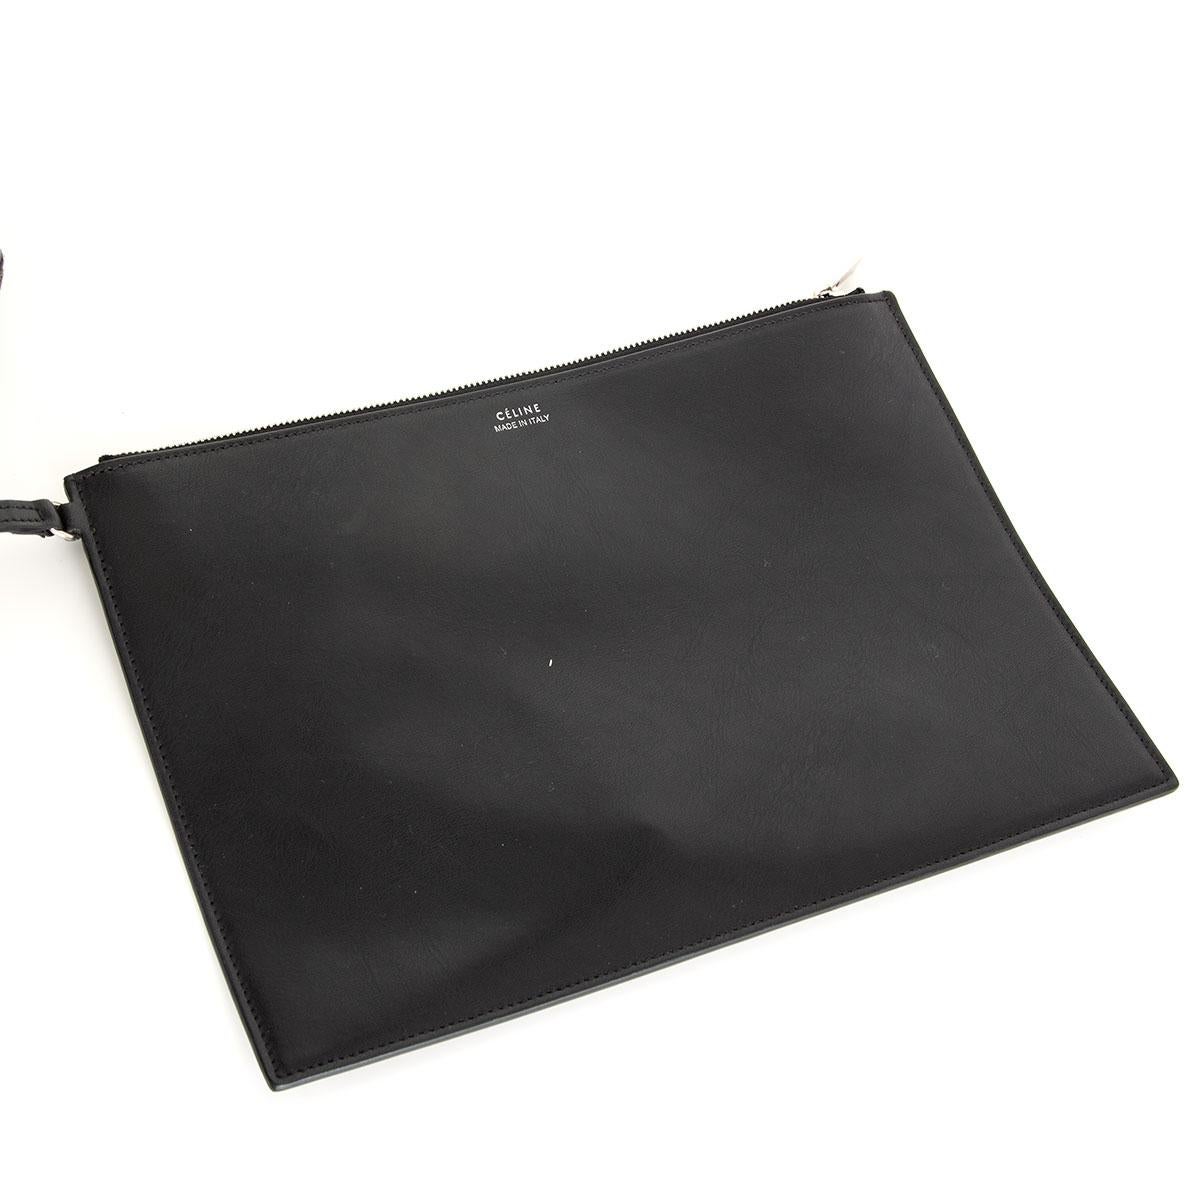 CELINE green canvas & black leather LOGO PATCHWORK MEDIUM TOTE Bag 1